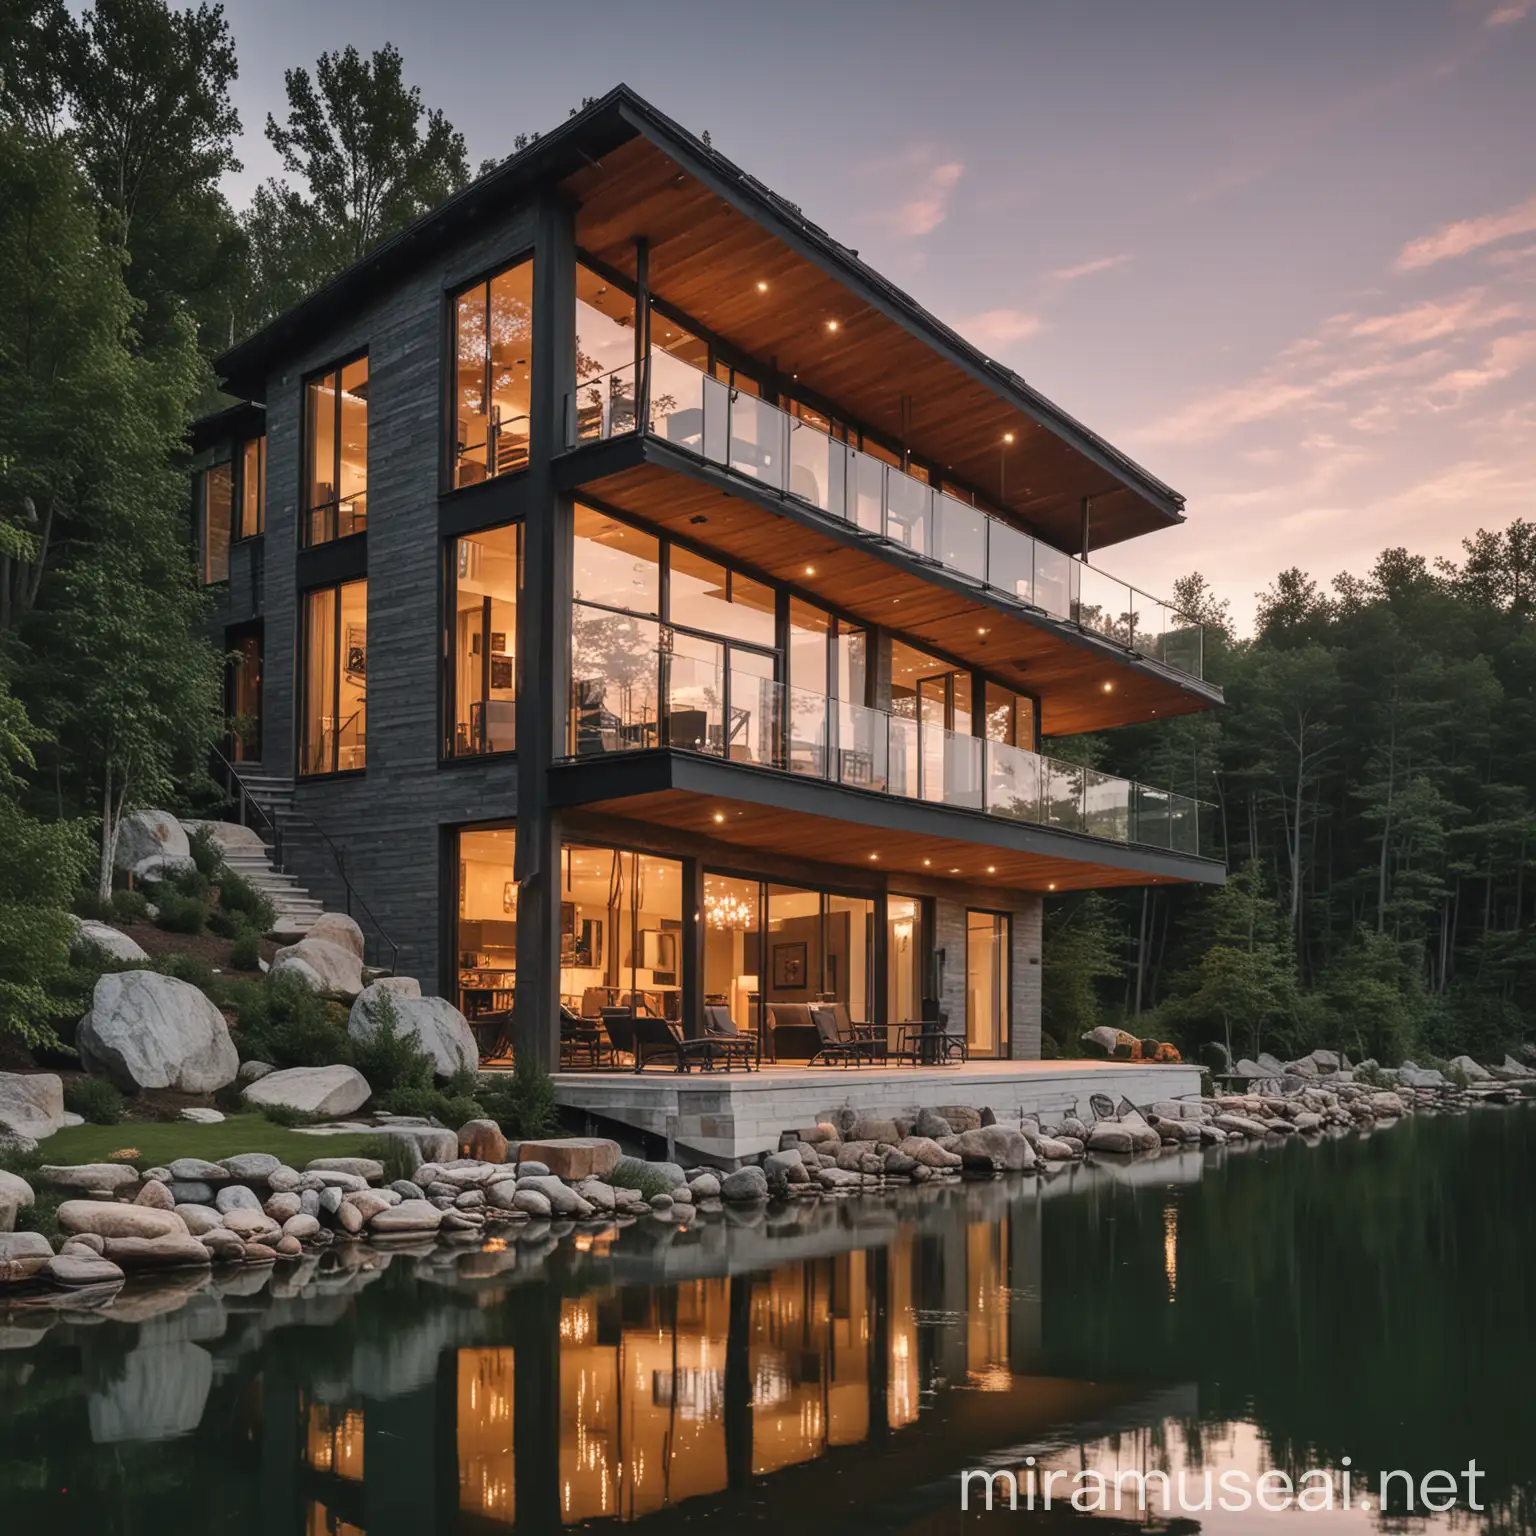 Modern lake house with balconies

